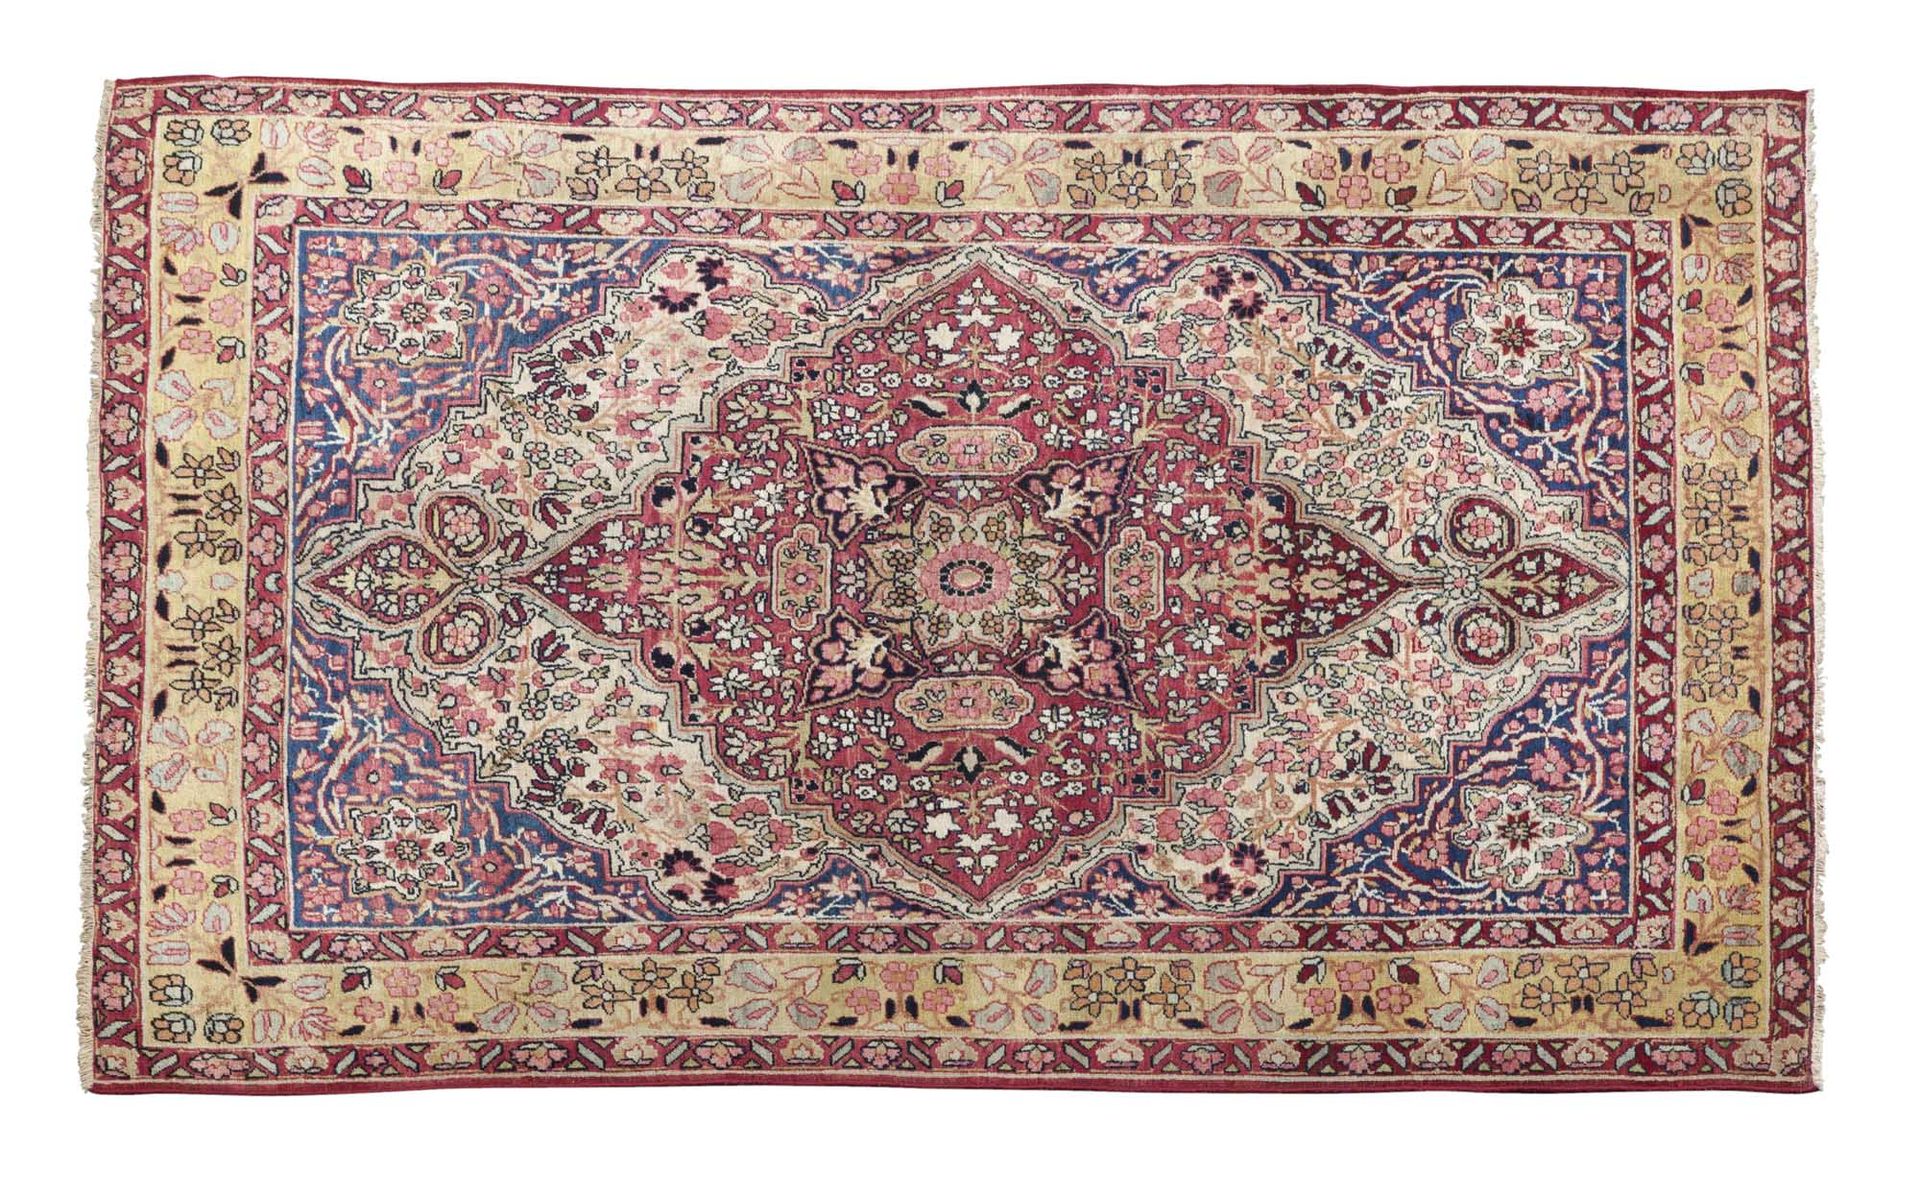 Null KIRMAN carpet (Persia), late 19th century

Dimensions : 200 x 132cm

Techni&hellip;